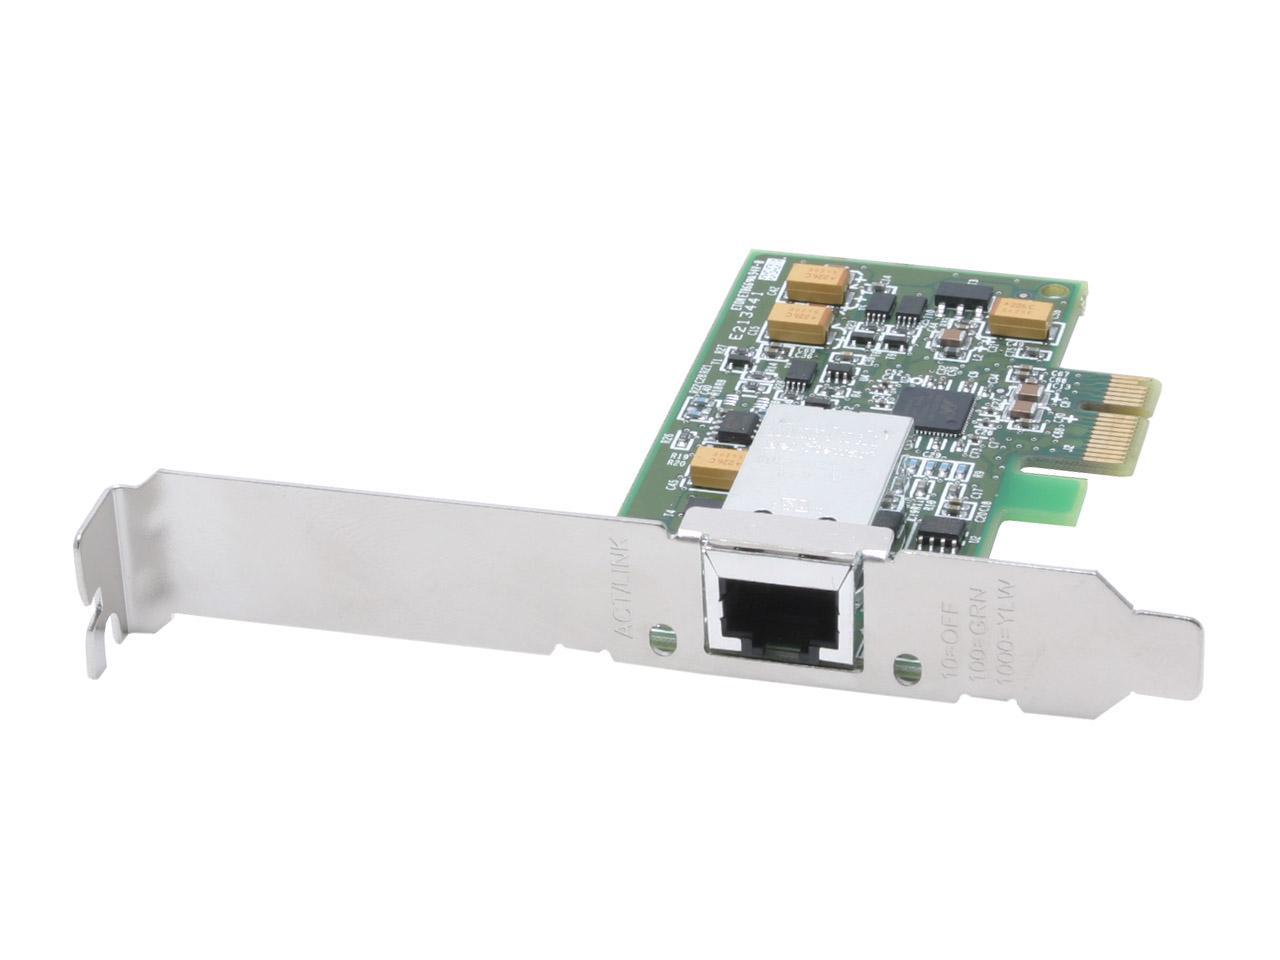 D-Link PCI Express Gigabit Ethernet Network Adapter Card PC PCIE 10/100/1000Mbps DGE-560T 